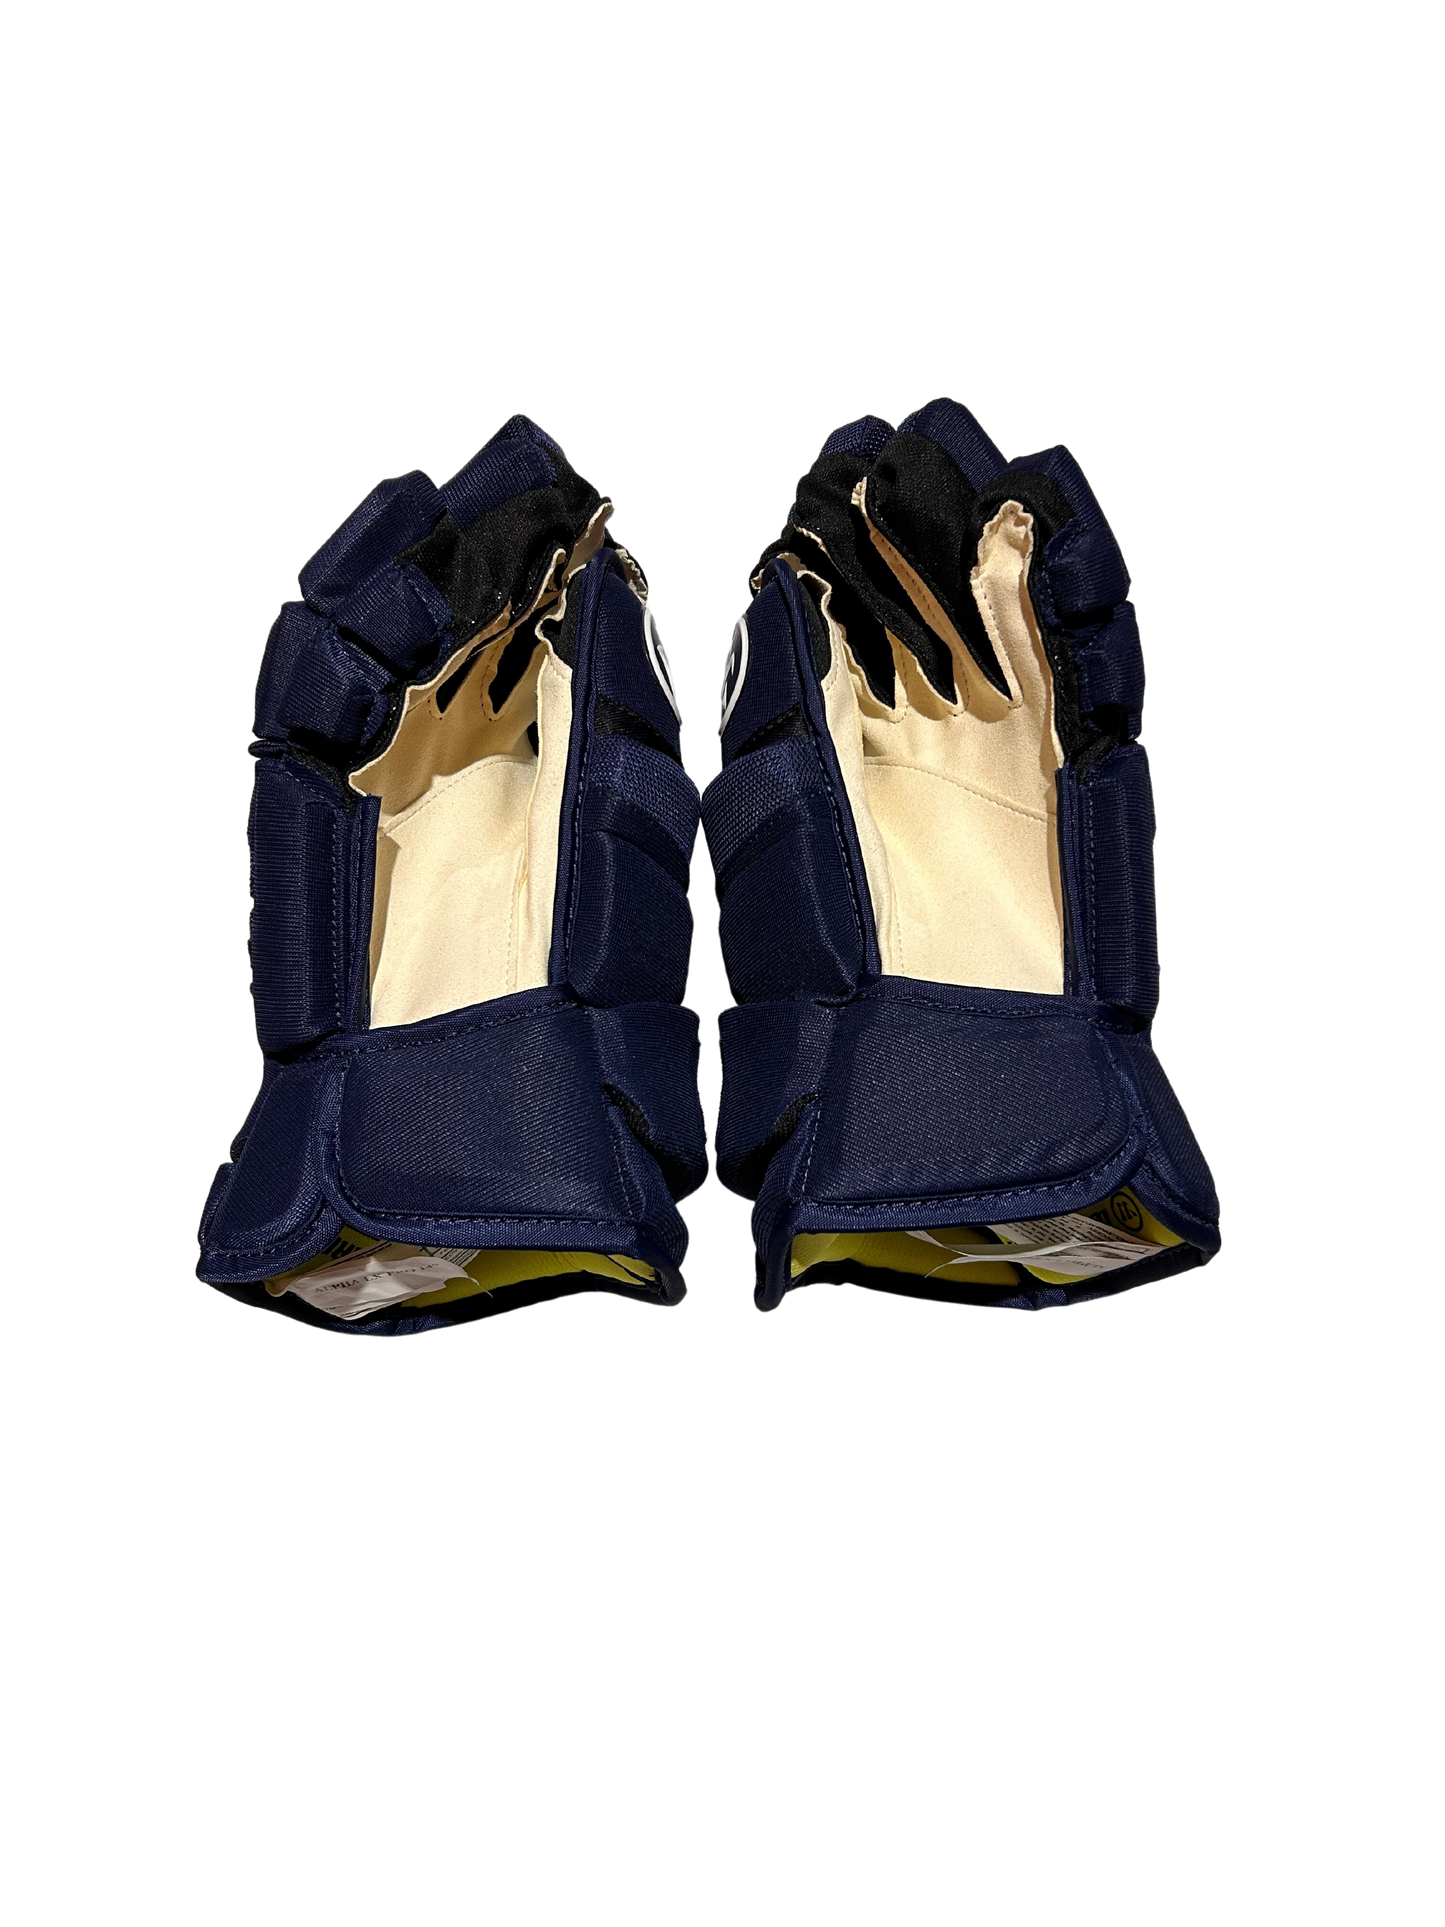 New Sedlak Navy Colorado Avalanche Warrior LX Pro Gloves